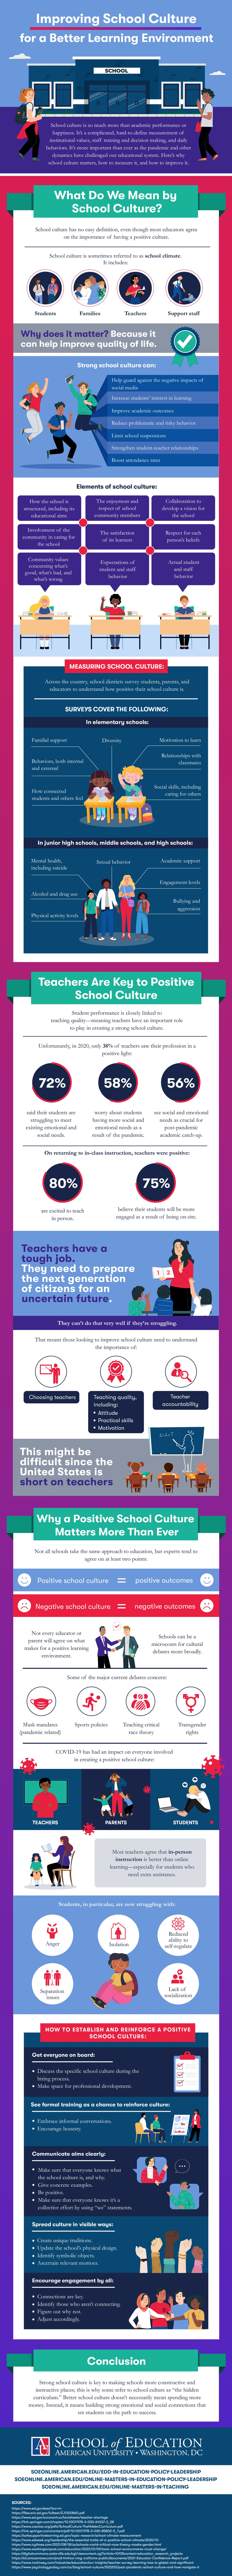 Infographic explaining how to improve school culture. 